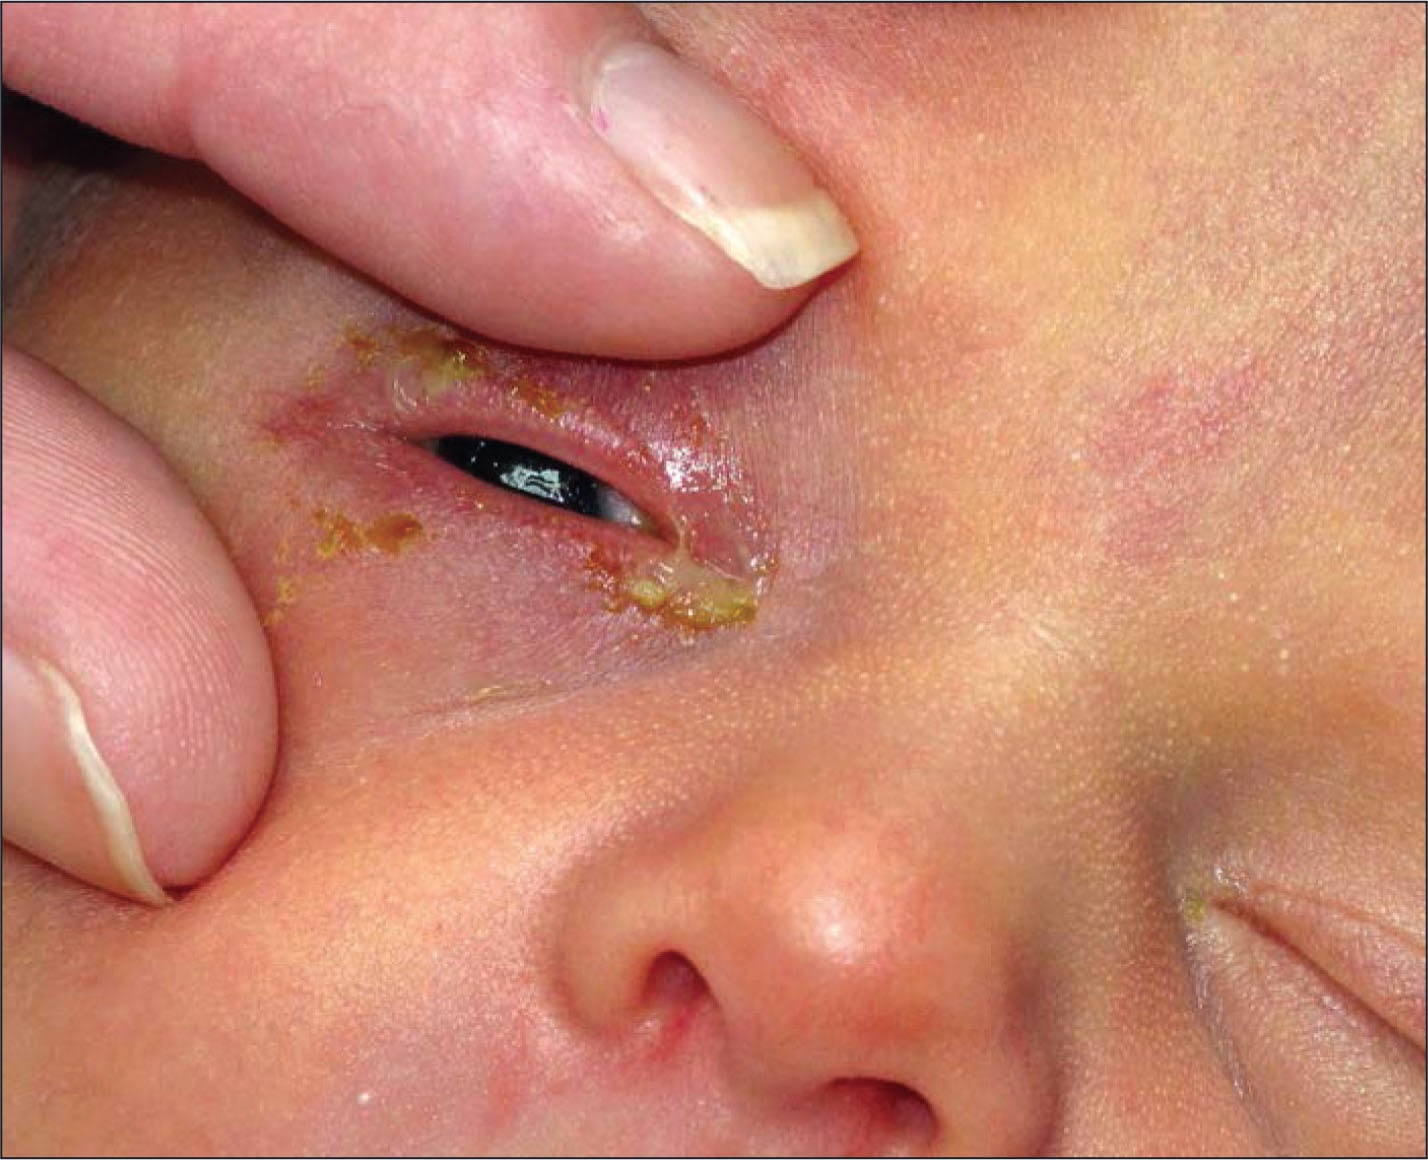 Do Newborns Still Need Ocular Erythromycin Prophylaxis After Delivery?